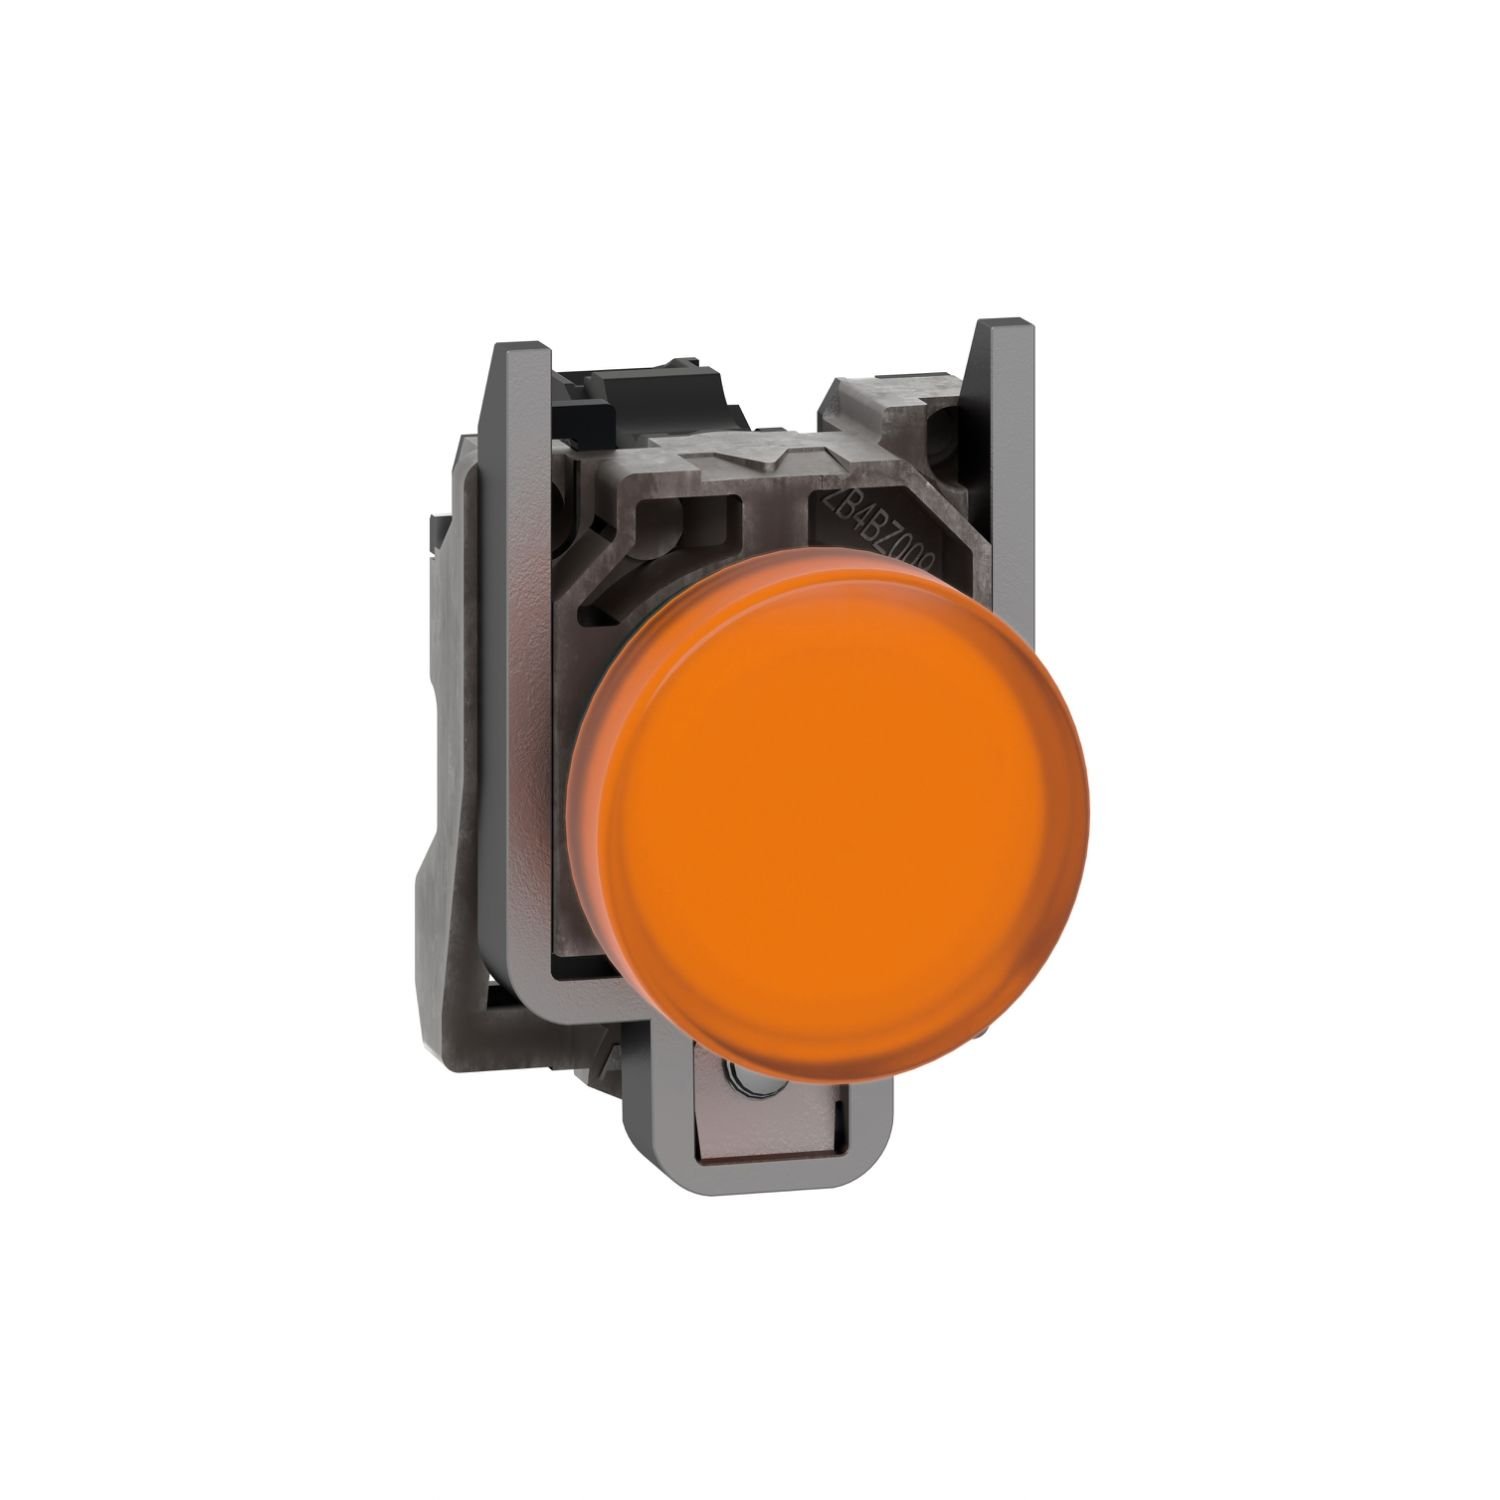 XB4BVB5 Pilot light, metal, orange, Ø22, plain lens with integral LED, 24 V AC/DC